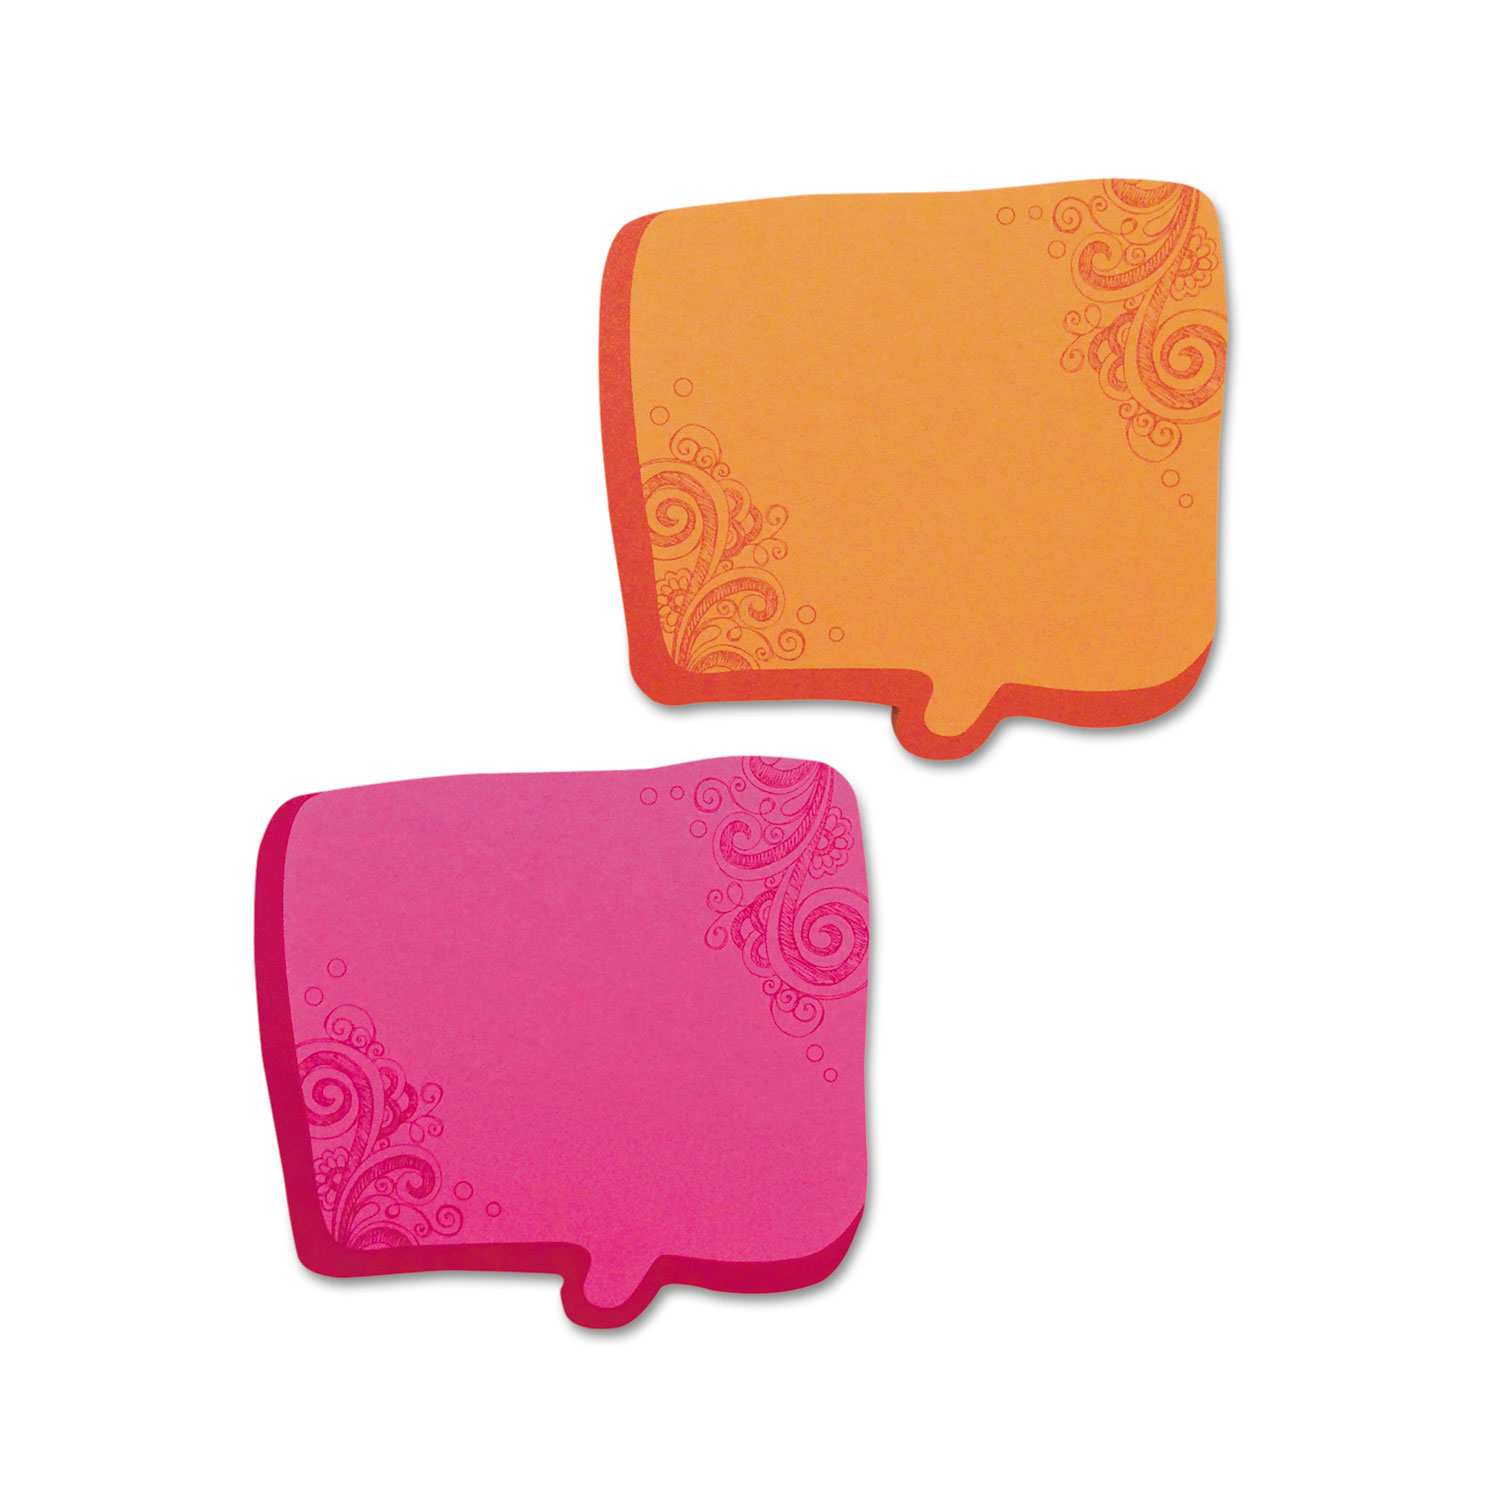  Redi-Tag 22100 Thought Bubble Notes, 2 3/4 x 2 3/4, Neon Orange/Magenta, 75-Sheet Pads, 2/Set (RTG22100) 